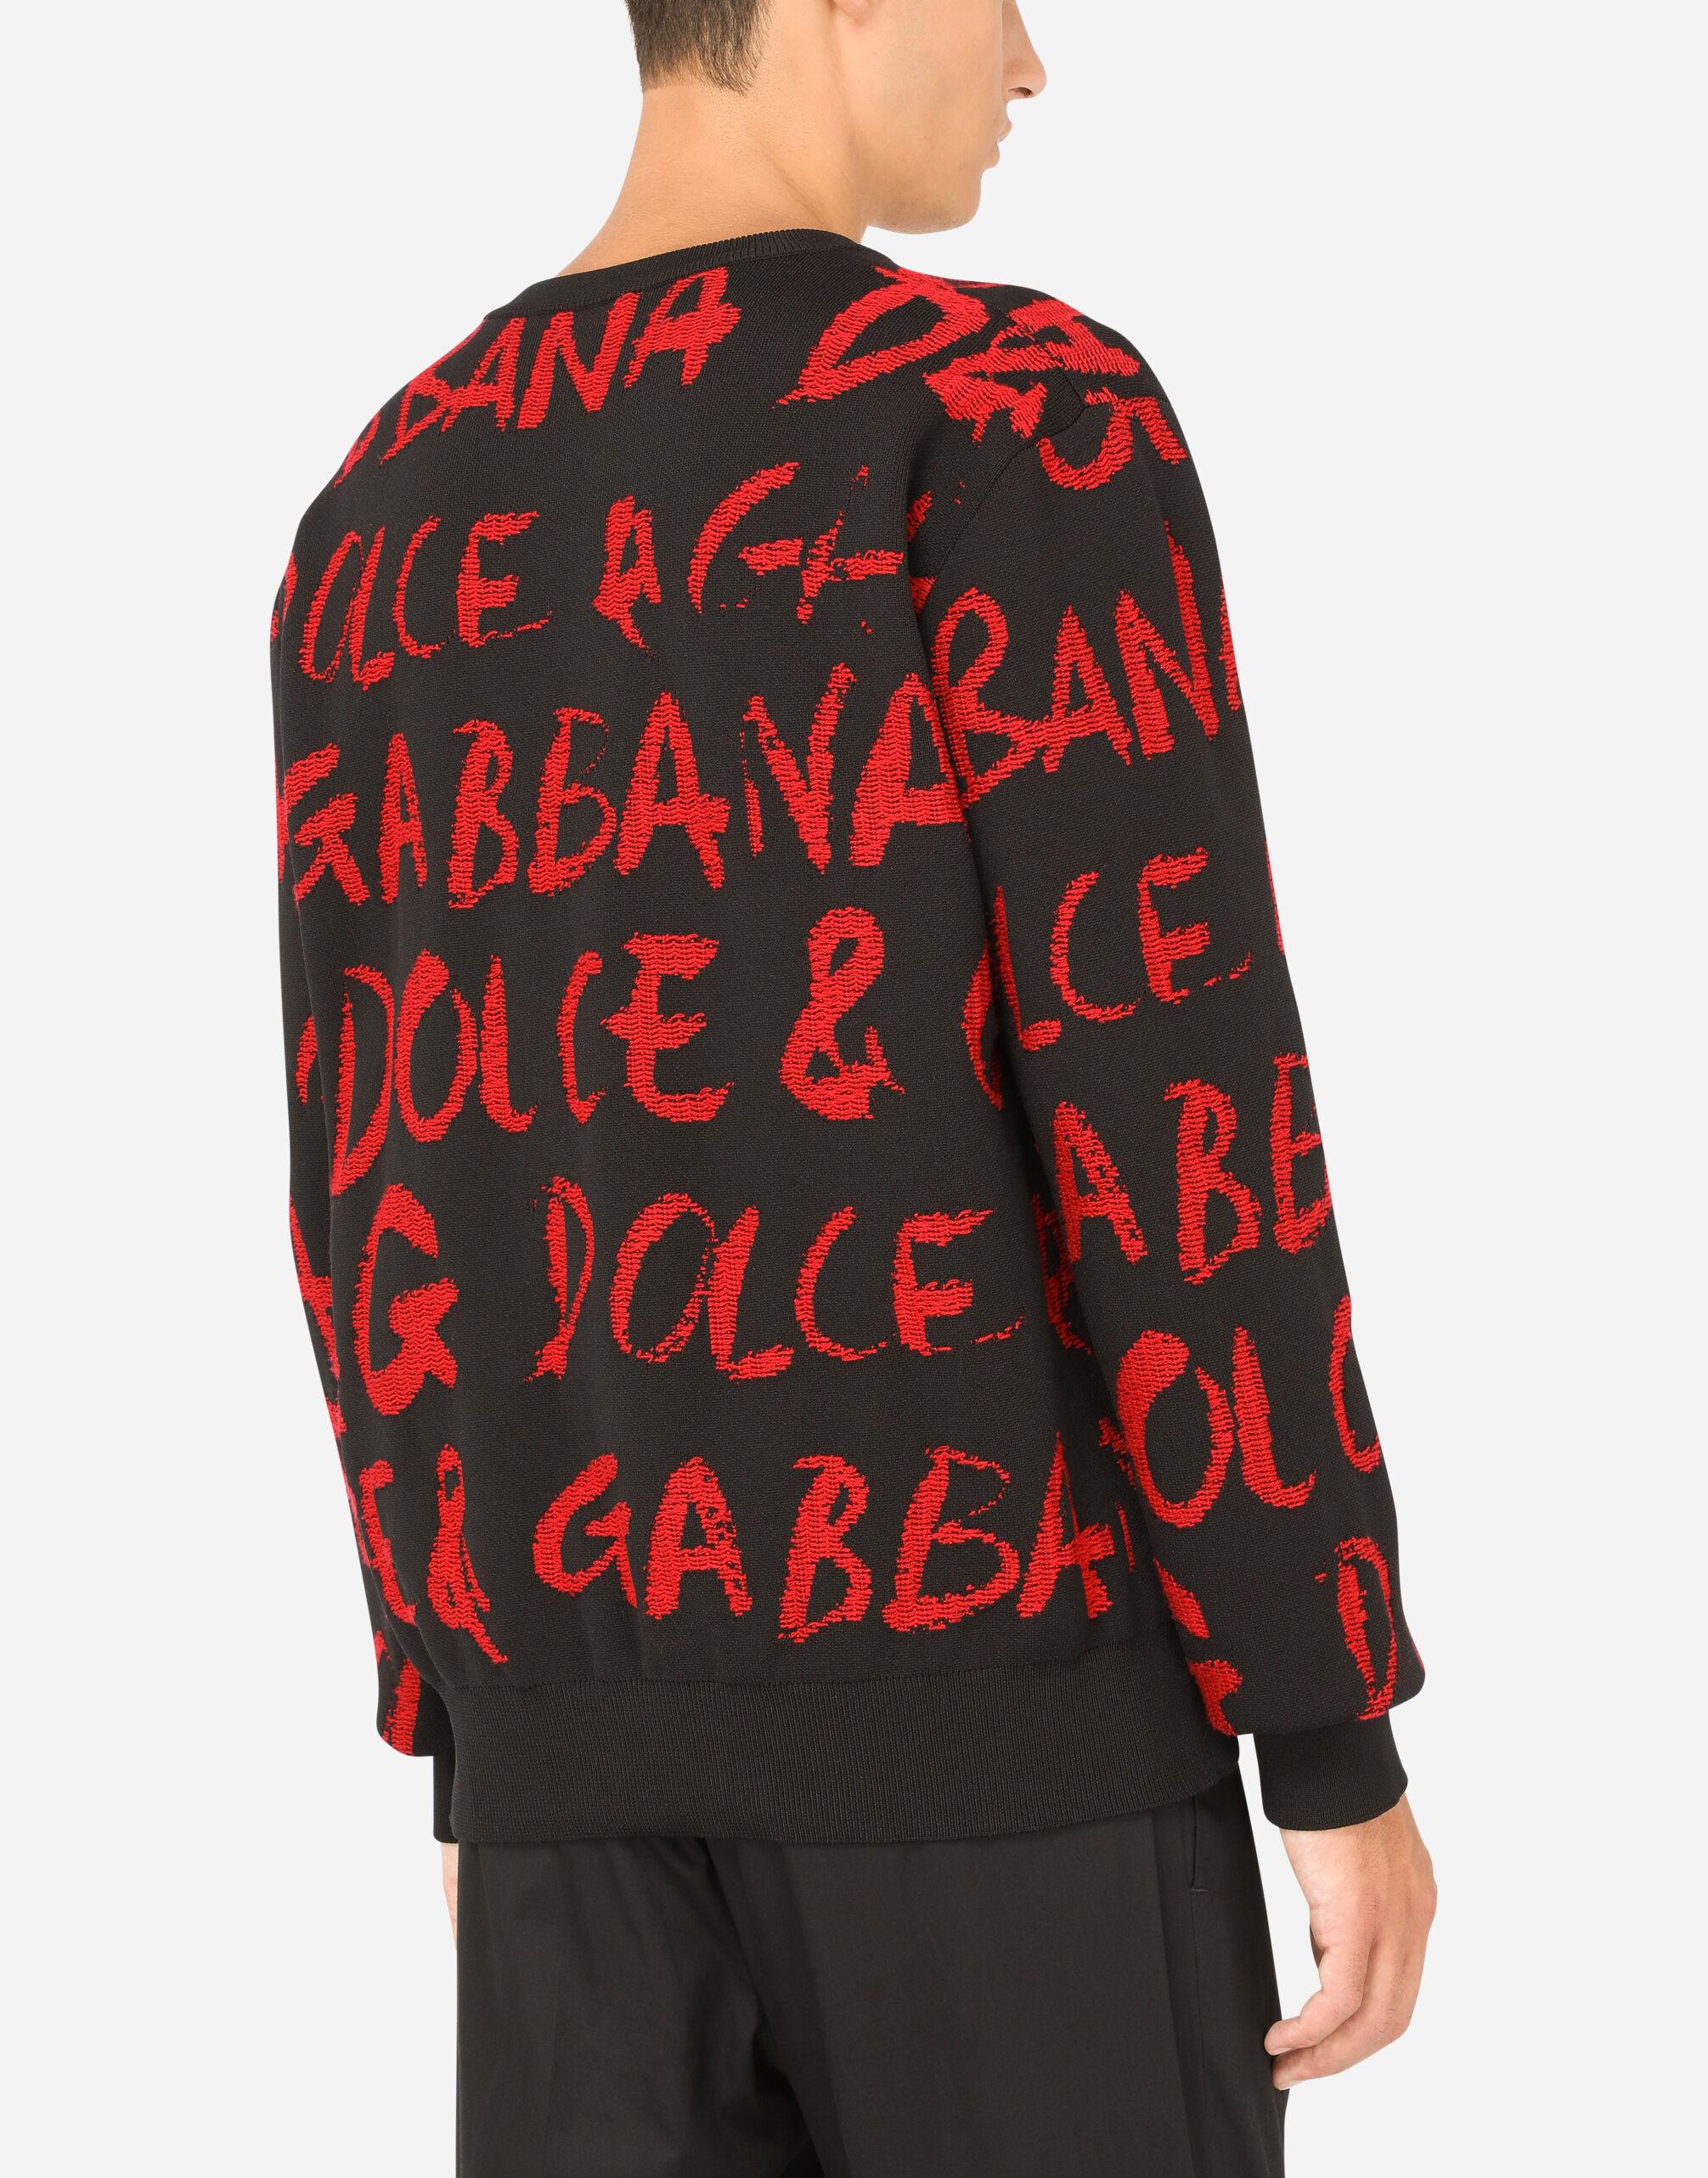 Dolce & Gabbana Monogram Jacquard Crewneck Jumper - ShopStyle